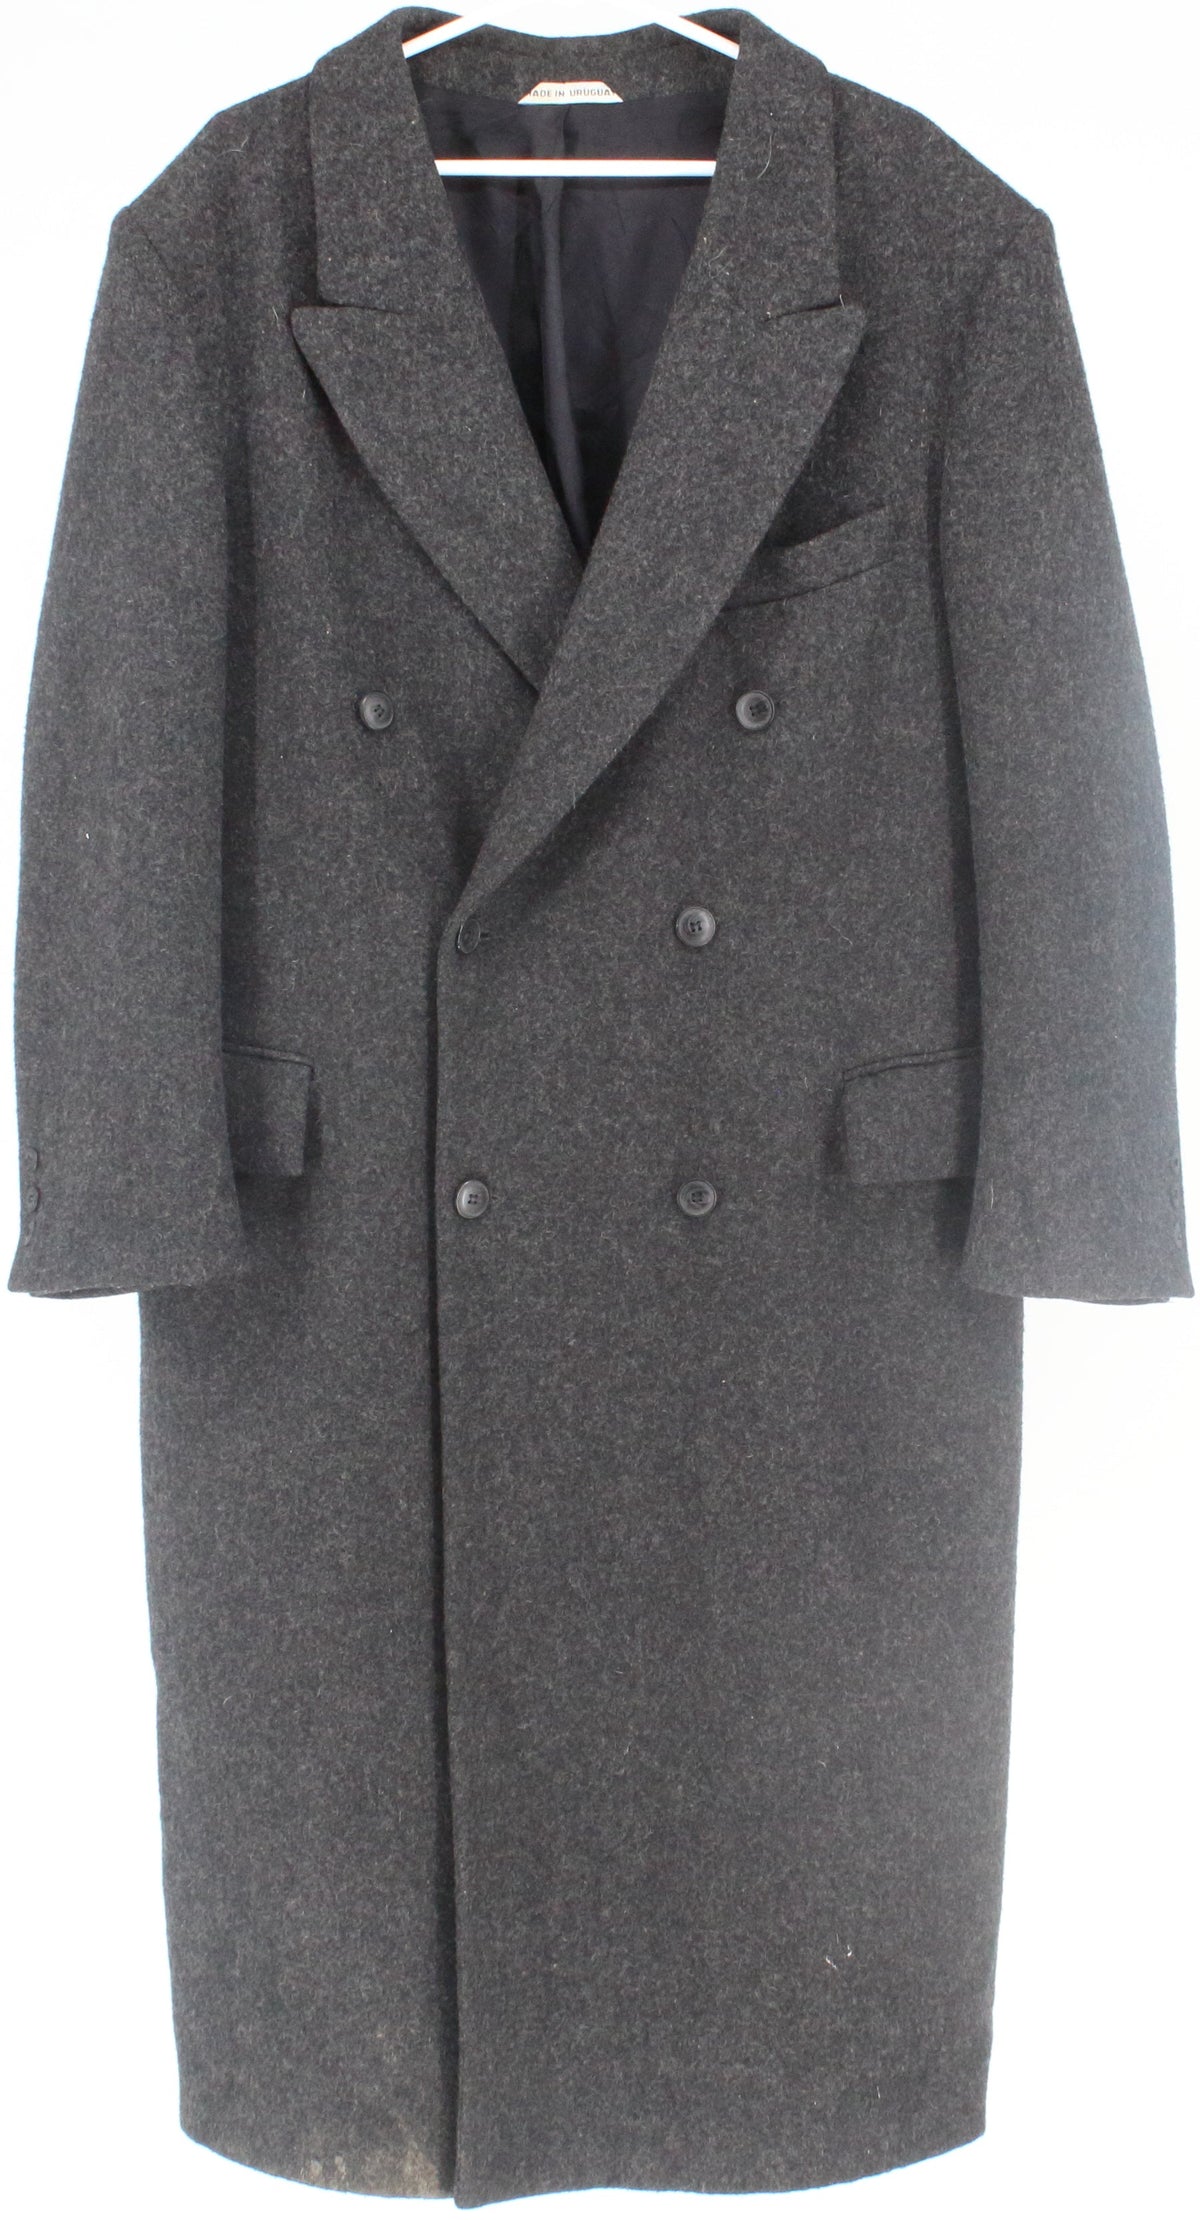 Executive Collection Dark Grey Men's Coat